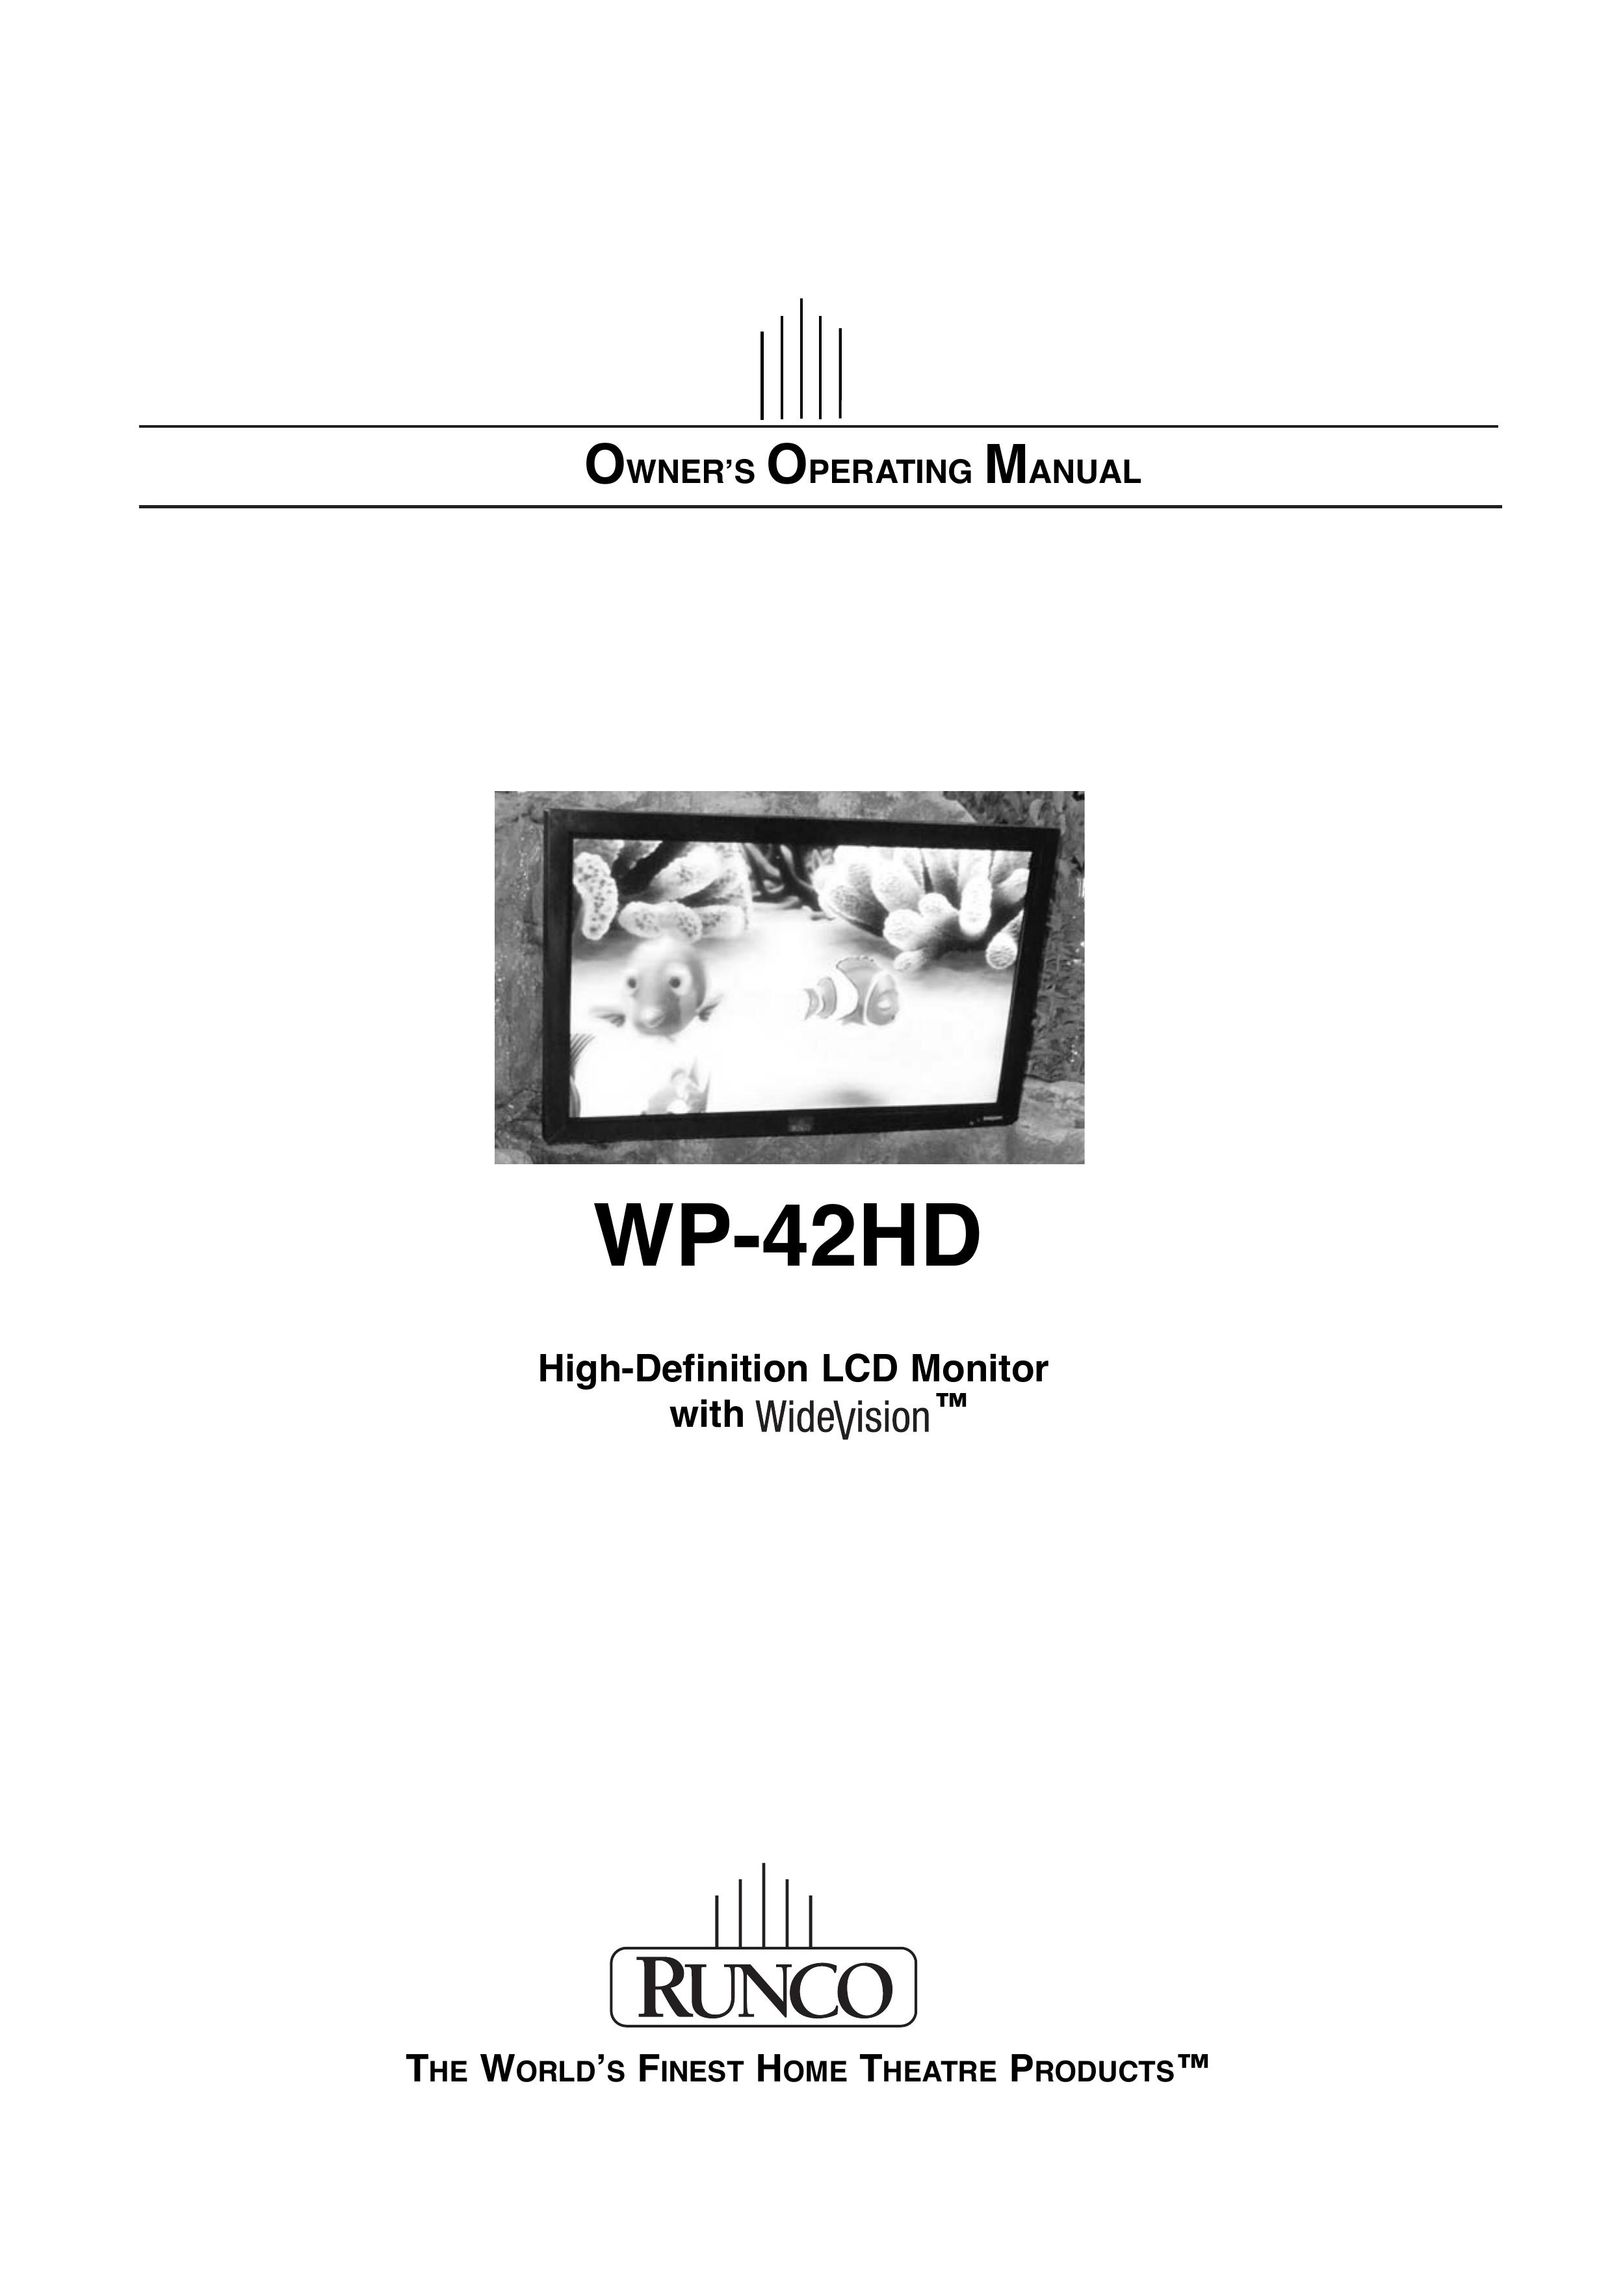 Runco WP-42HD Car Video System User Manual